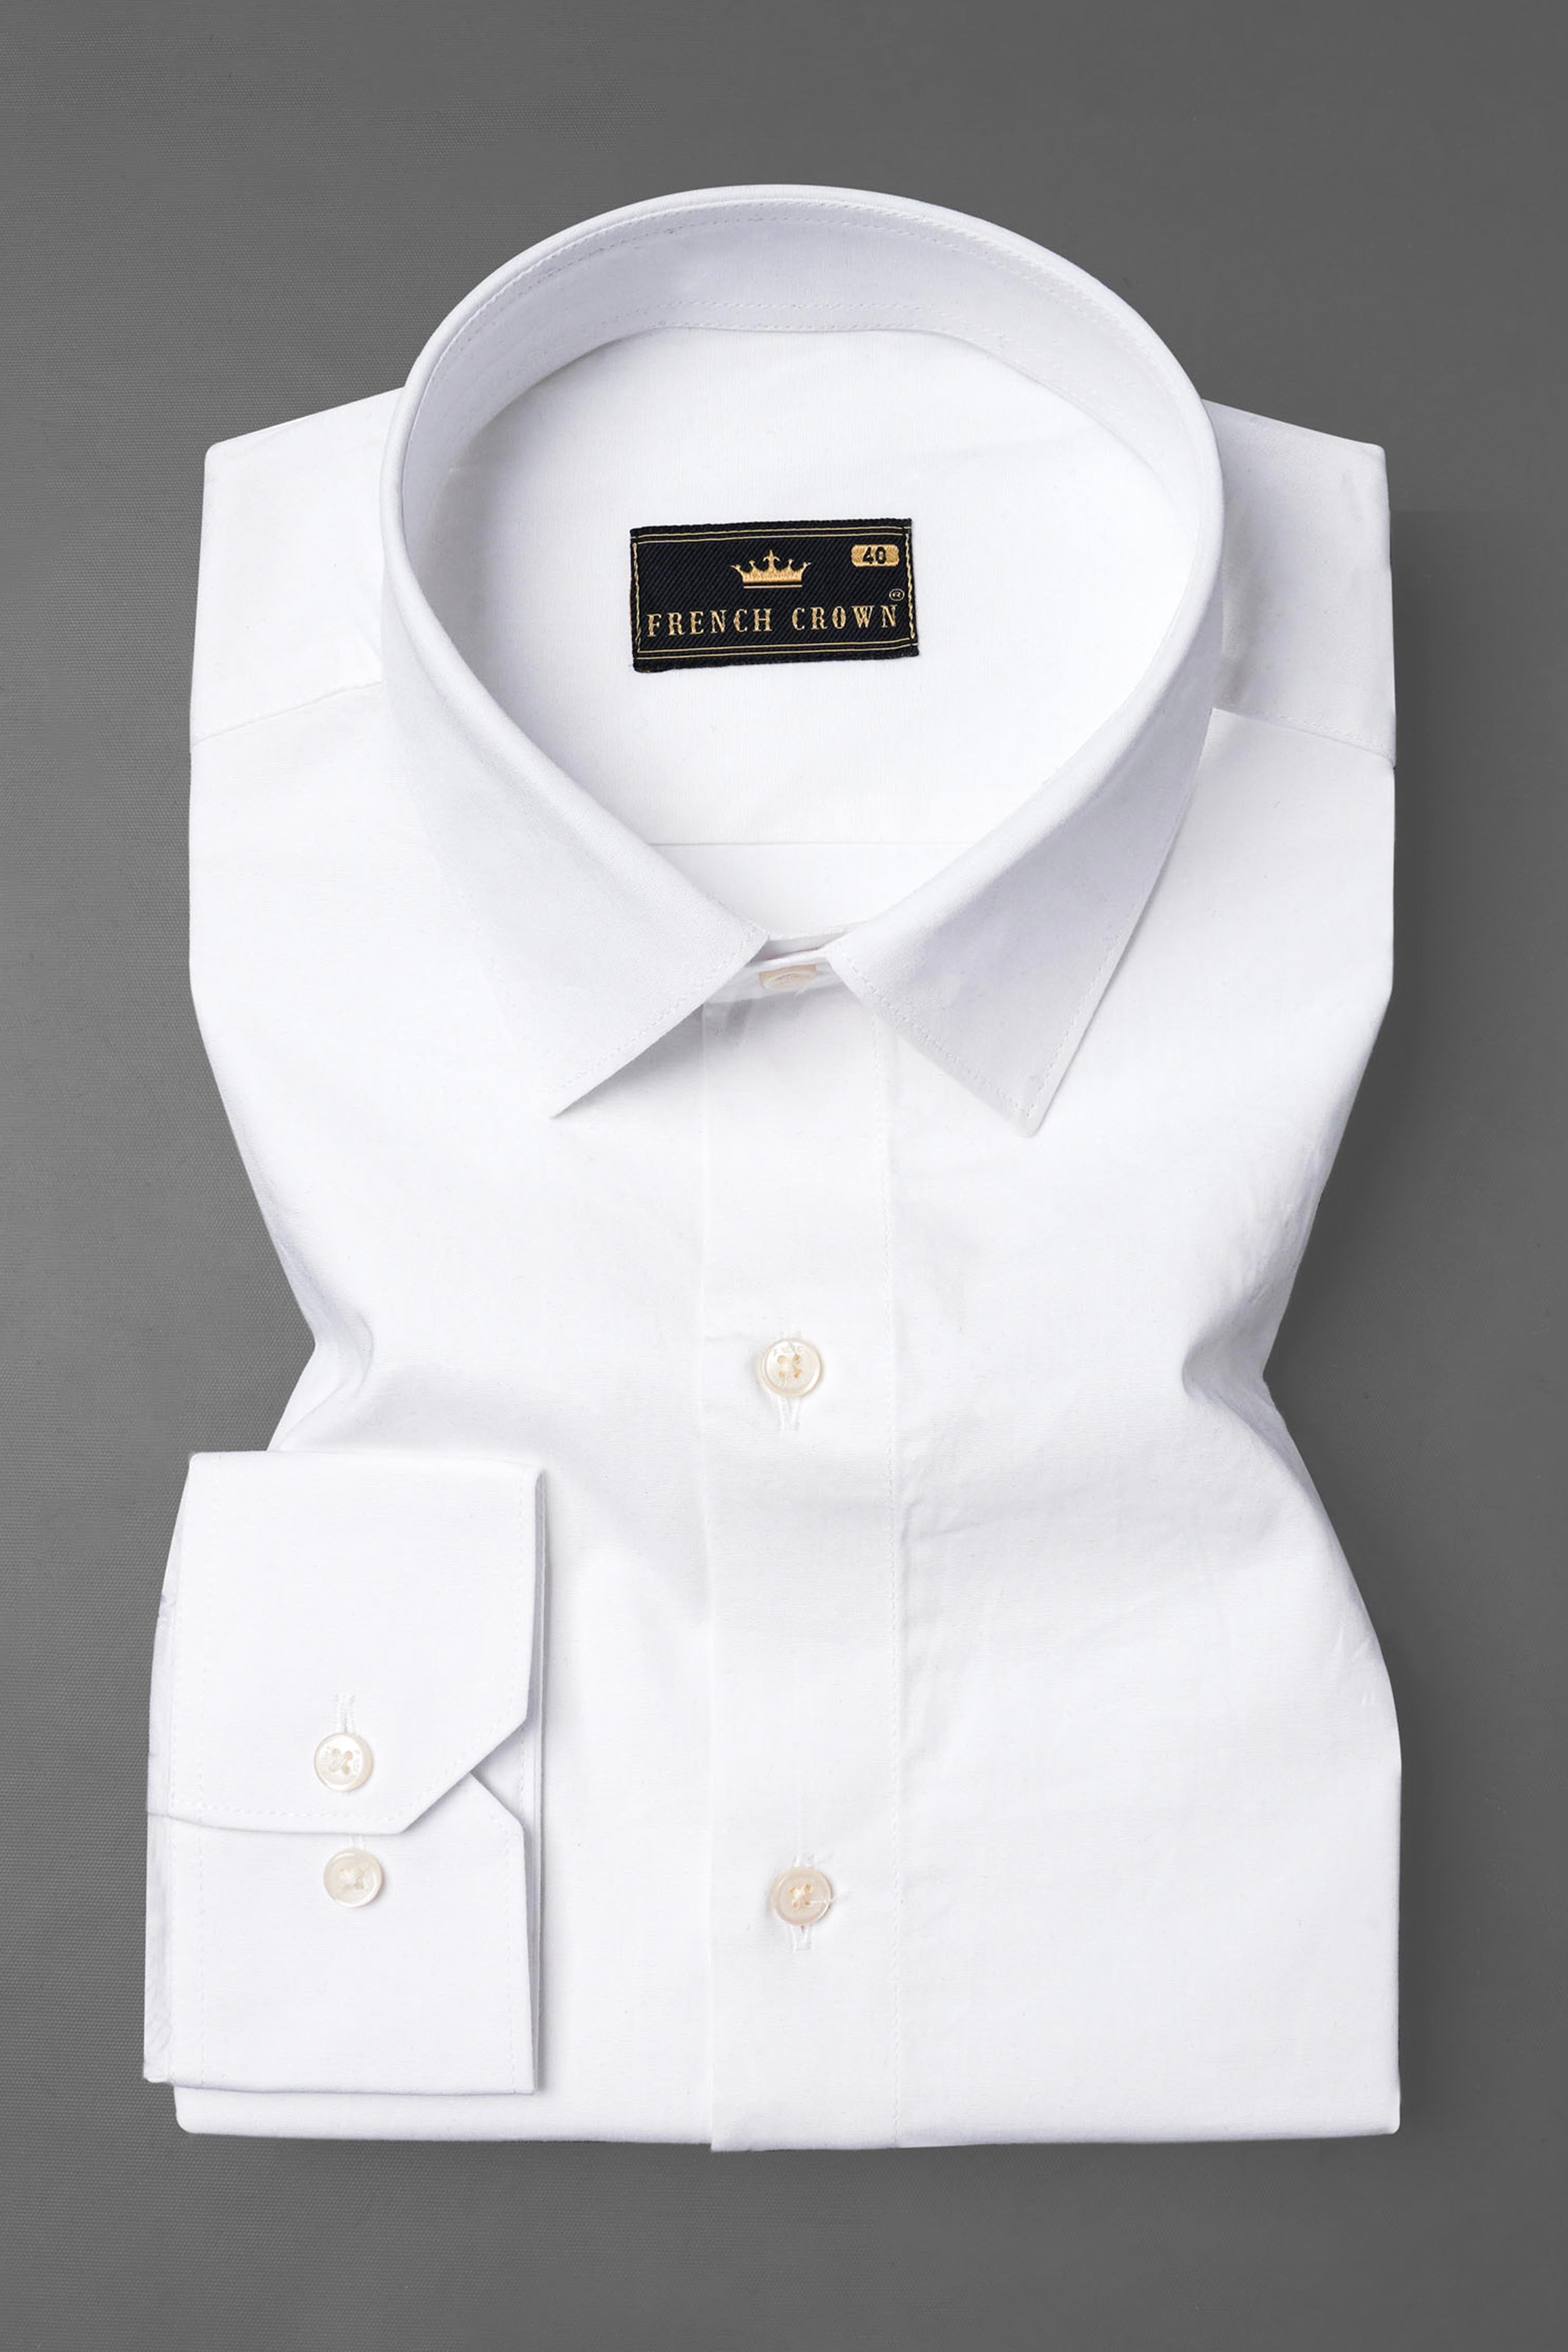 Bright White With Multi Coloured Plaid Super Soft Premium Cotton Half and Half Designer Shirt